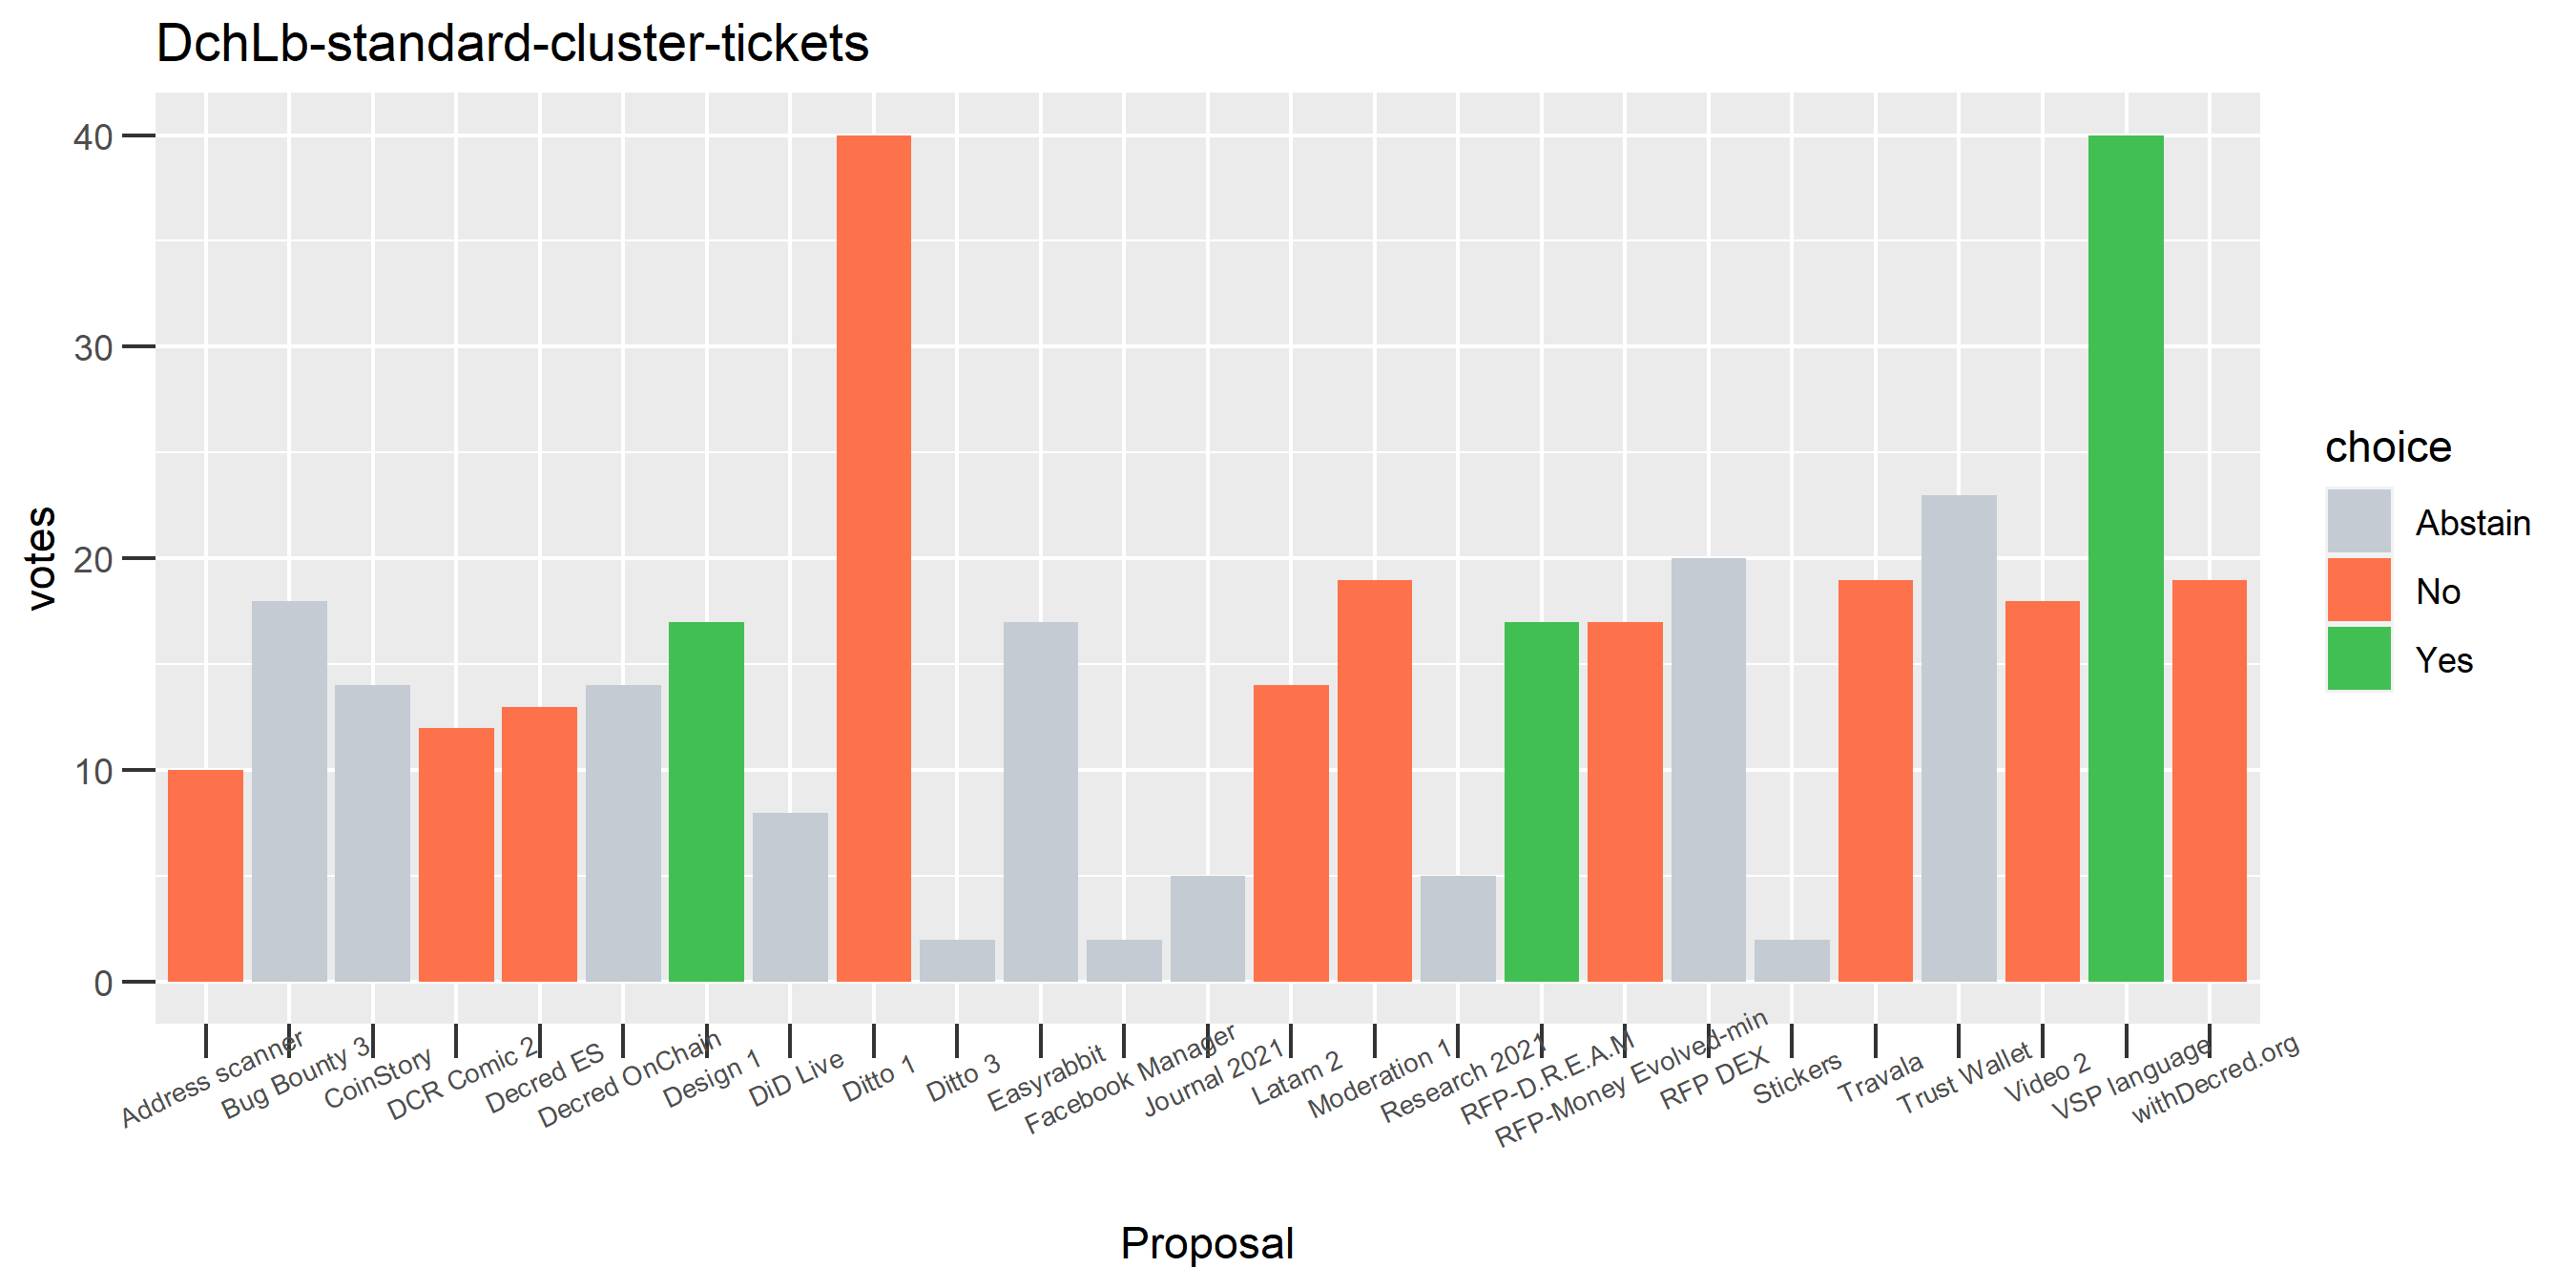 DchLb-standard-cluster-tickets